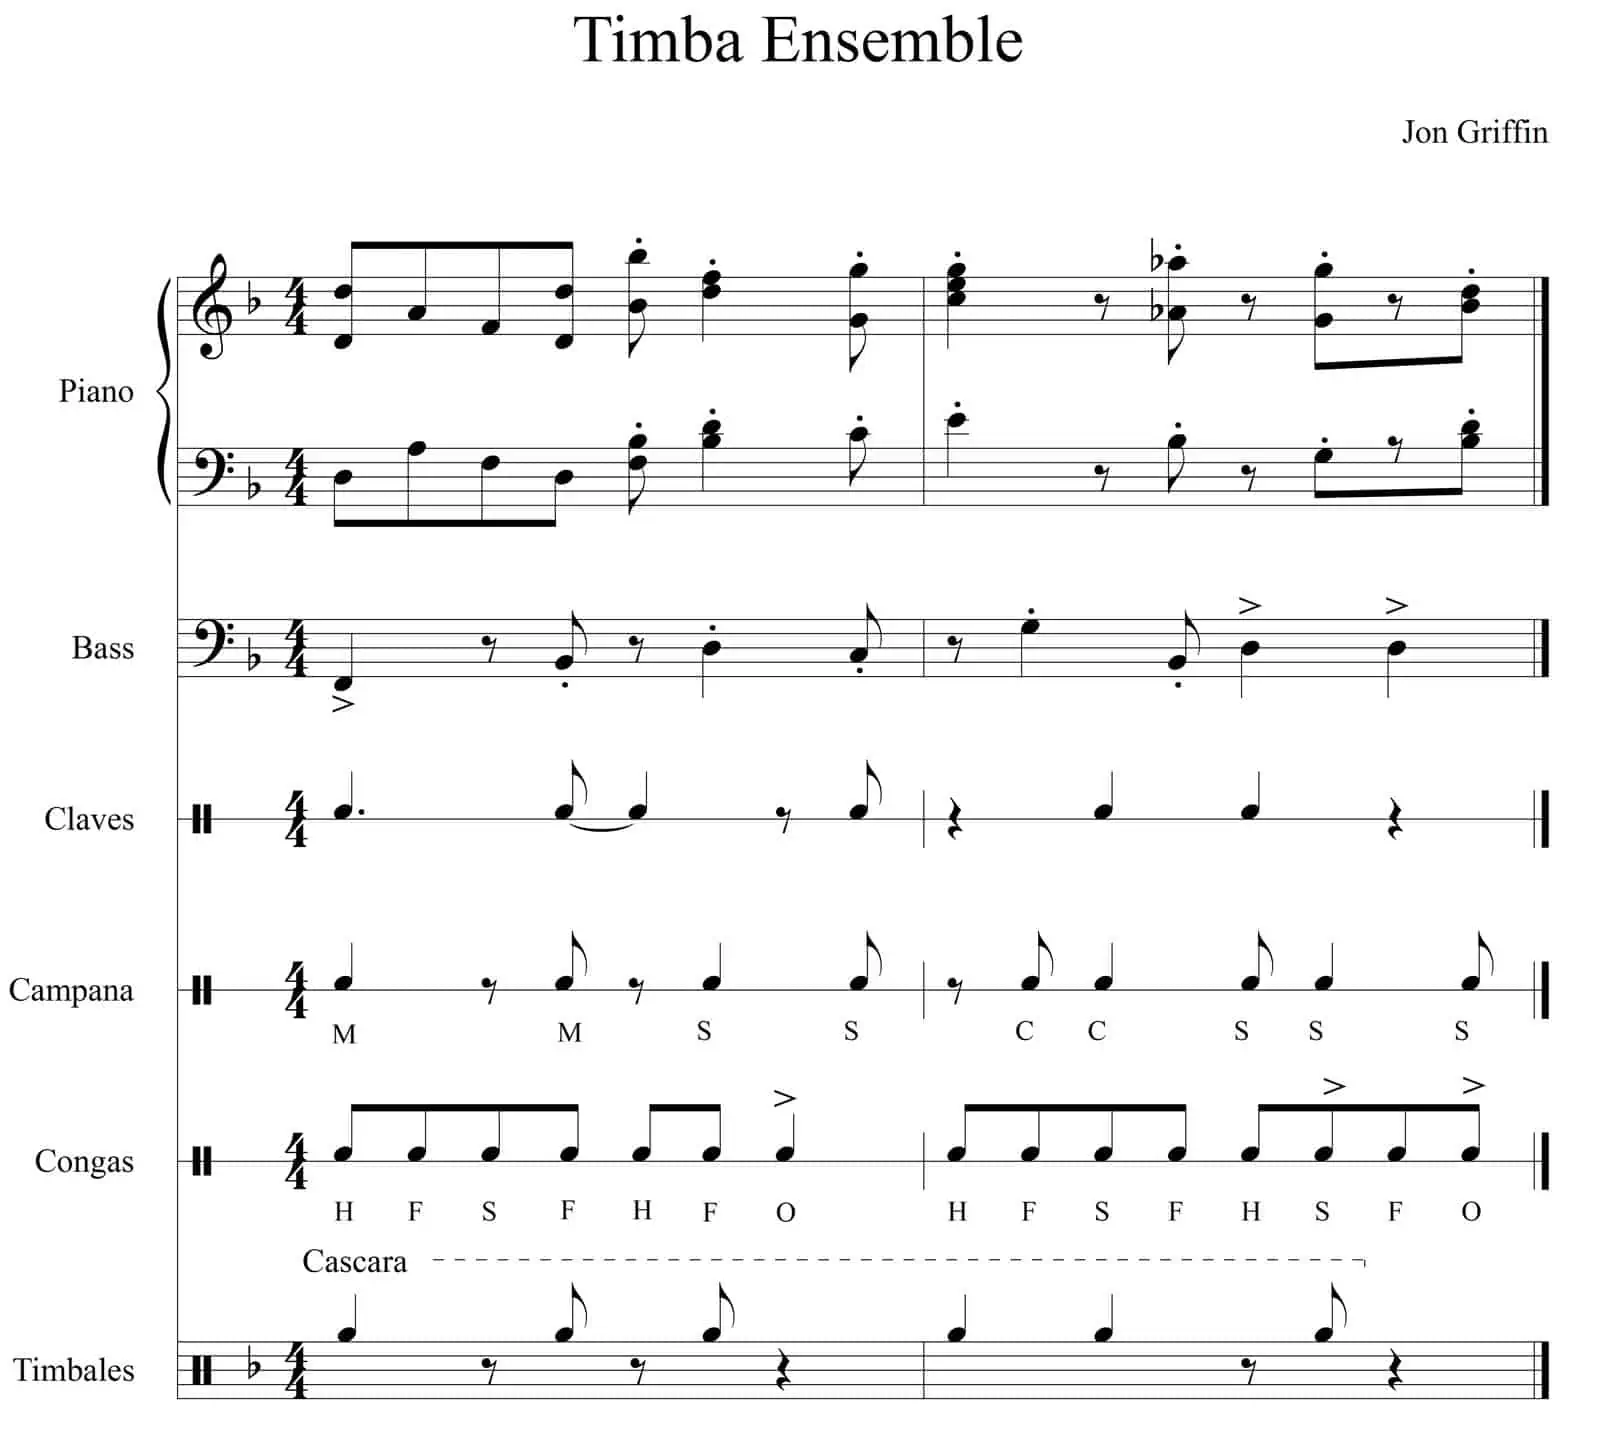 Timba Ensemble Example image